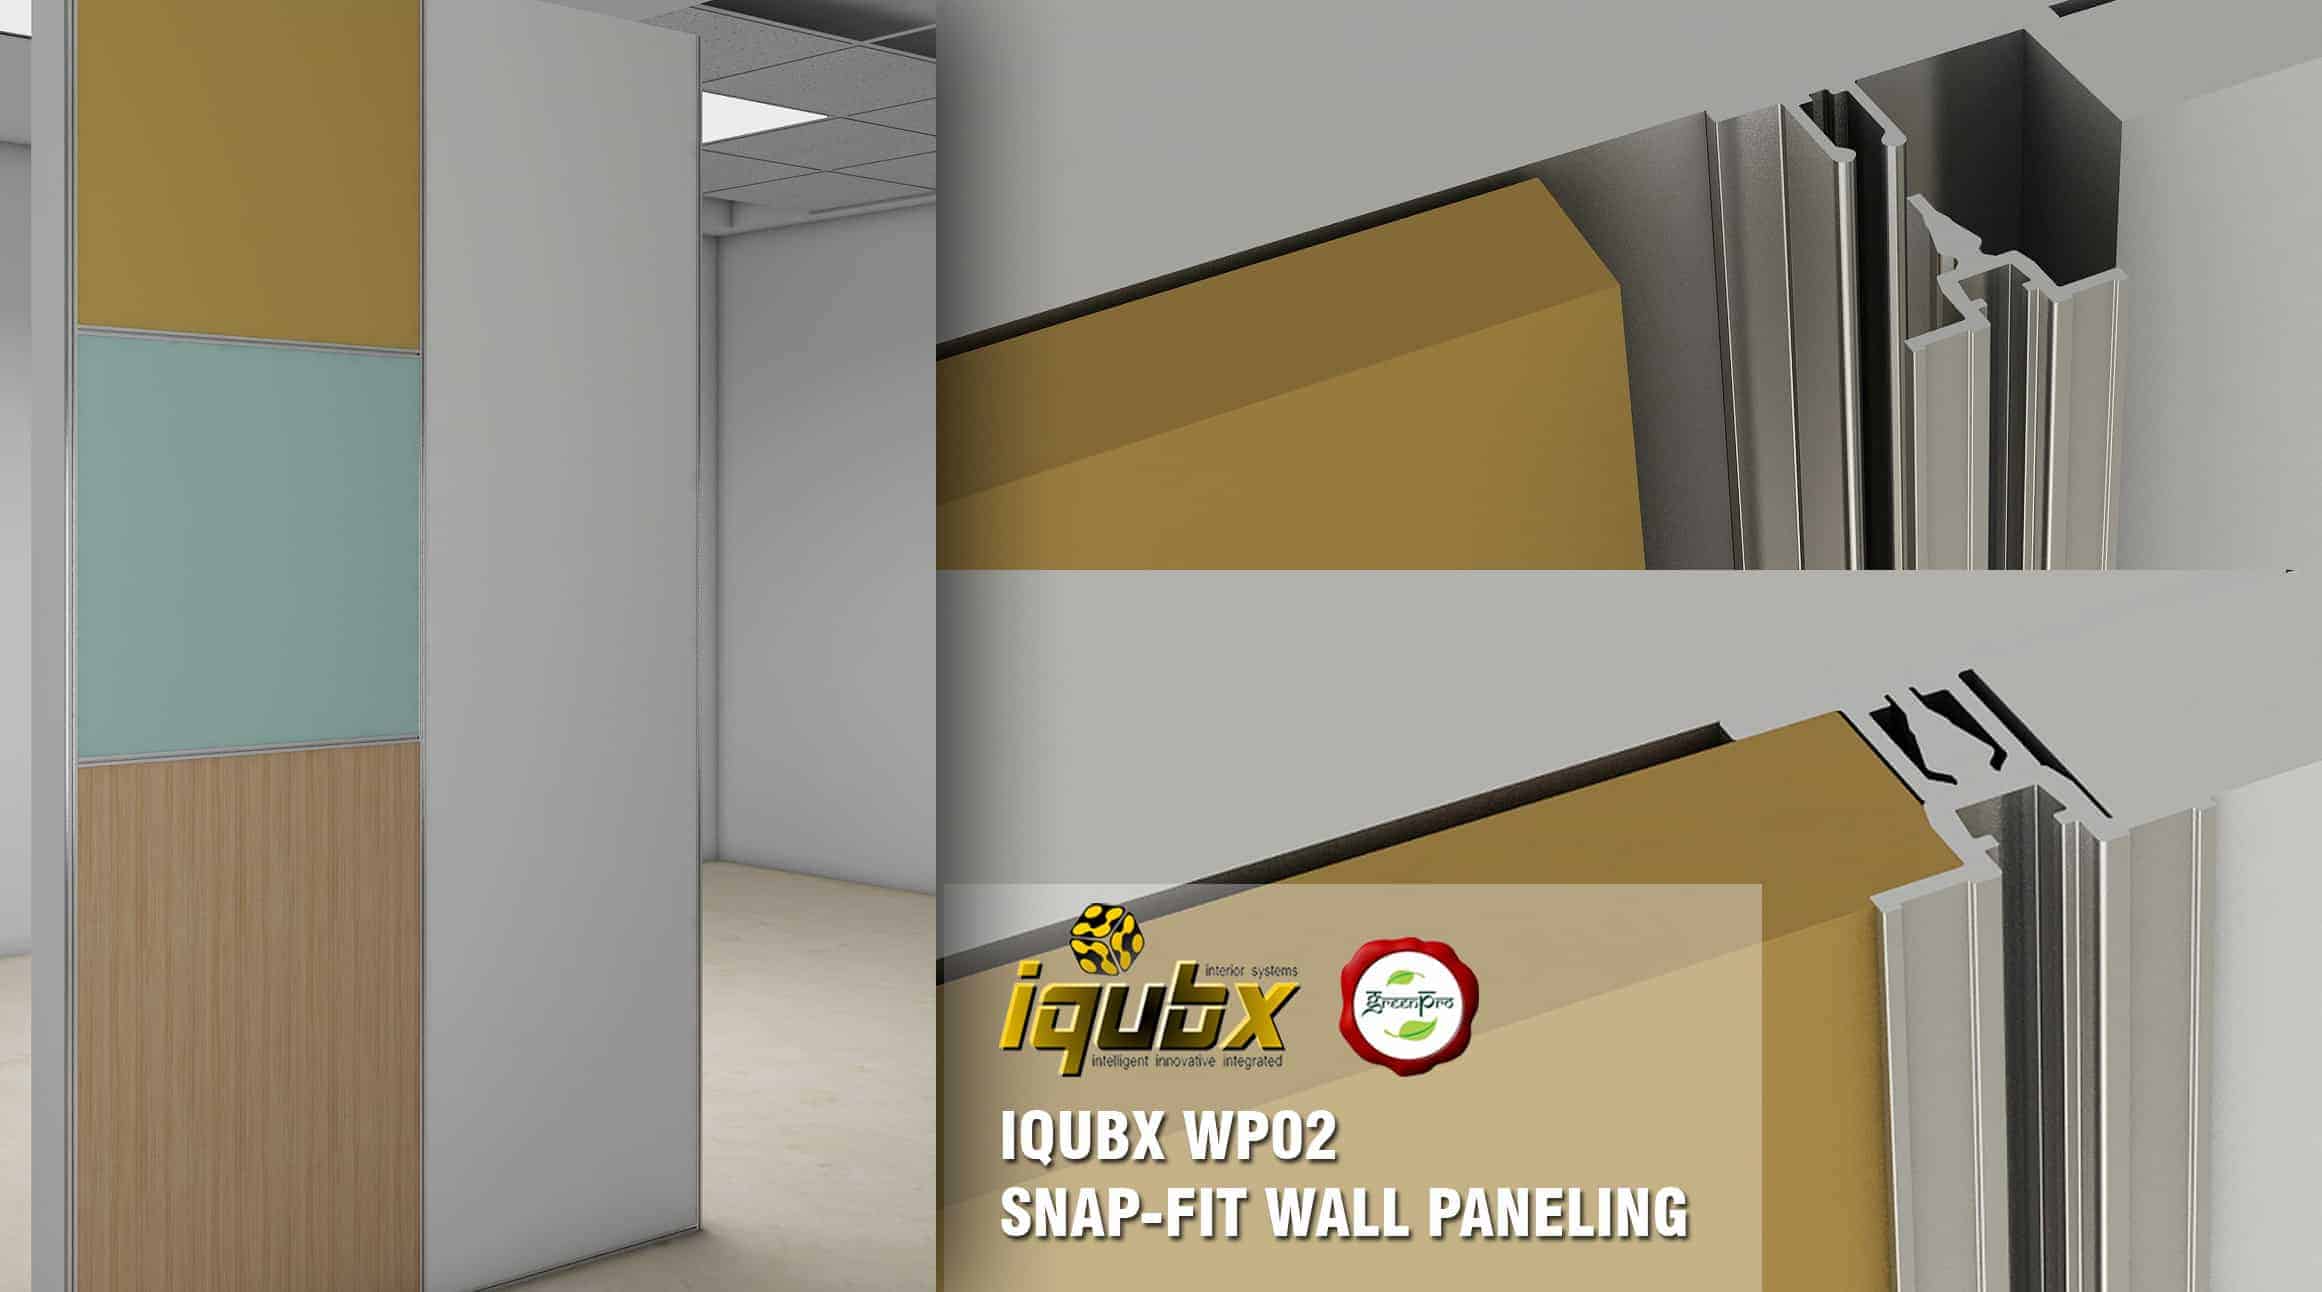 Demountable Wall Paneling Panelling For Wall Wood